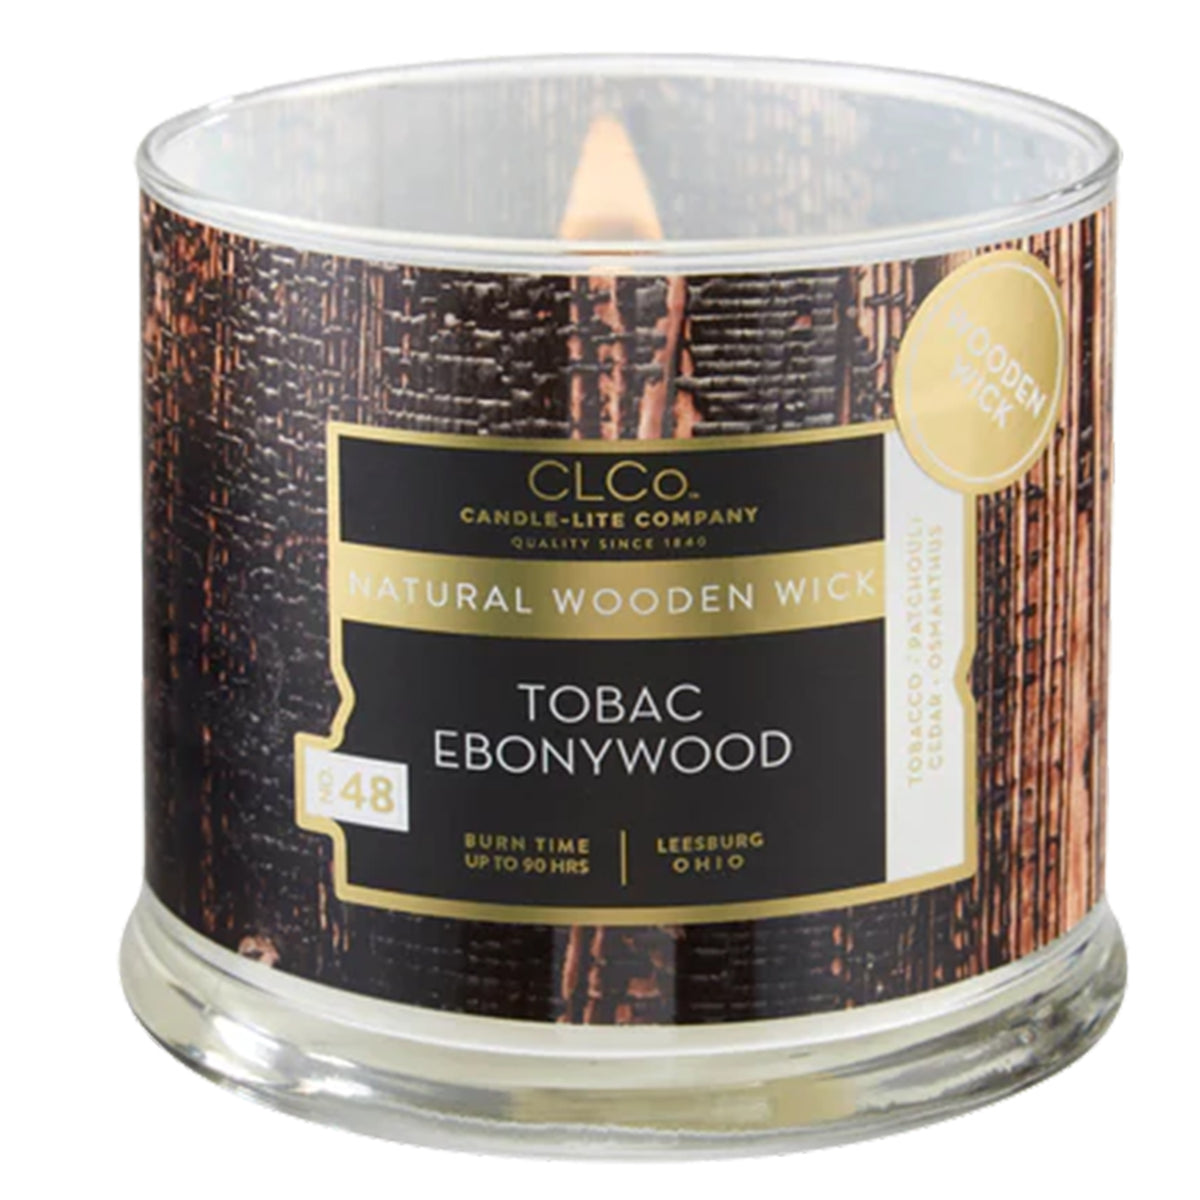 Tobac Ebonywood Natural Wooden Wick Glass Jar Candle